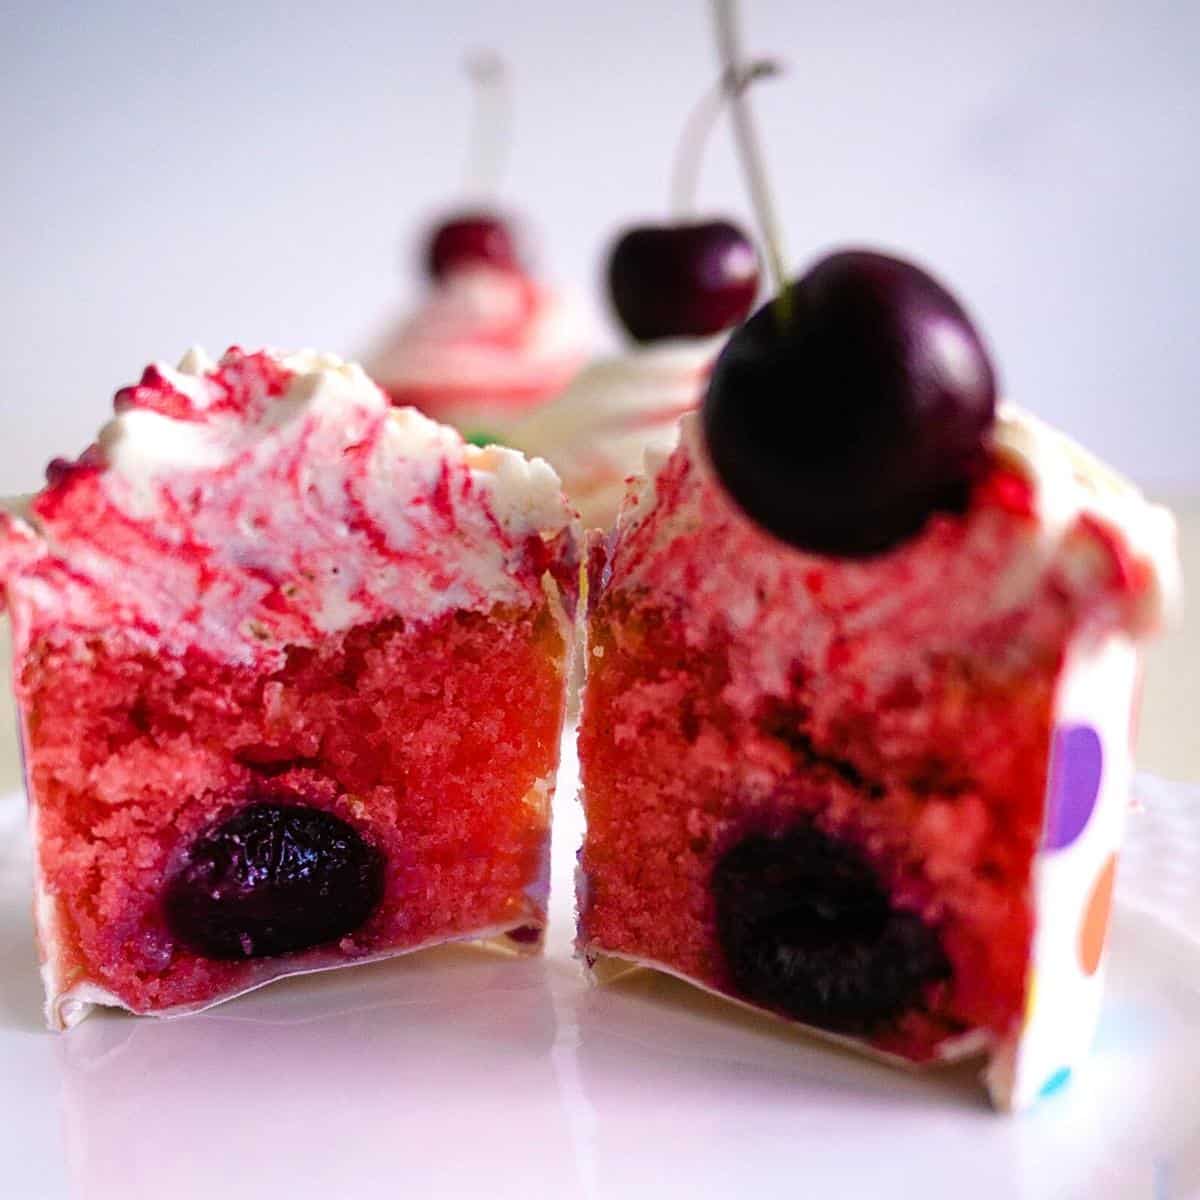 A cut cherry cupcake with fresh cherry.